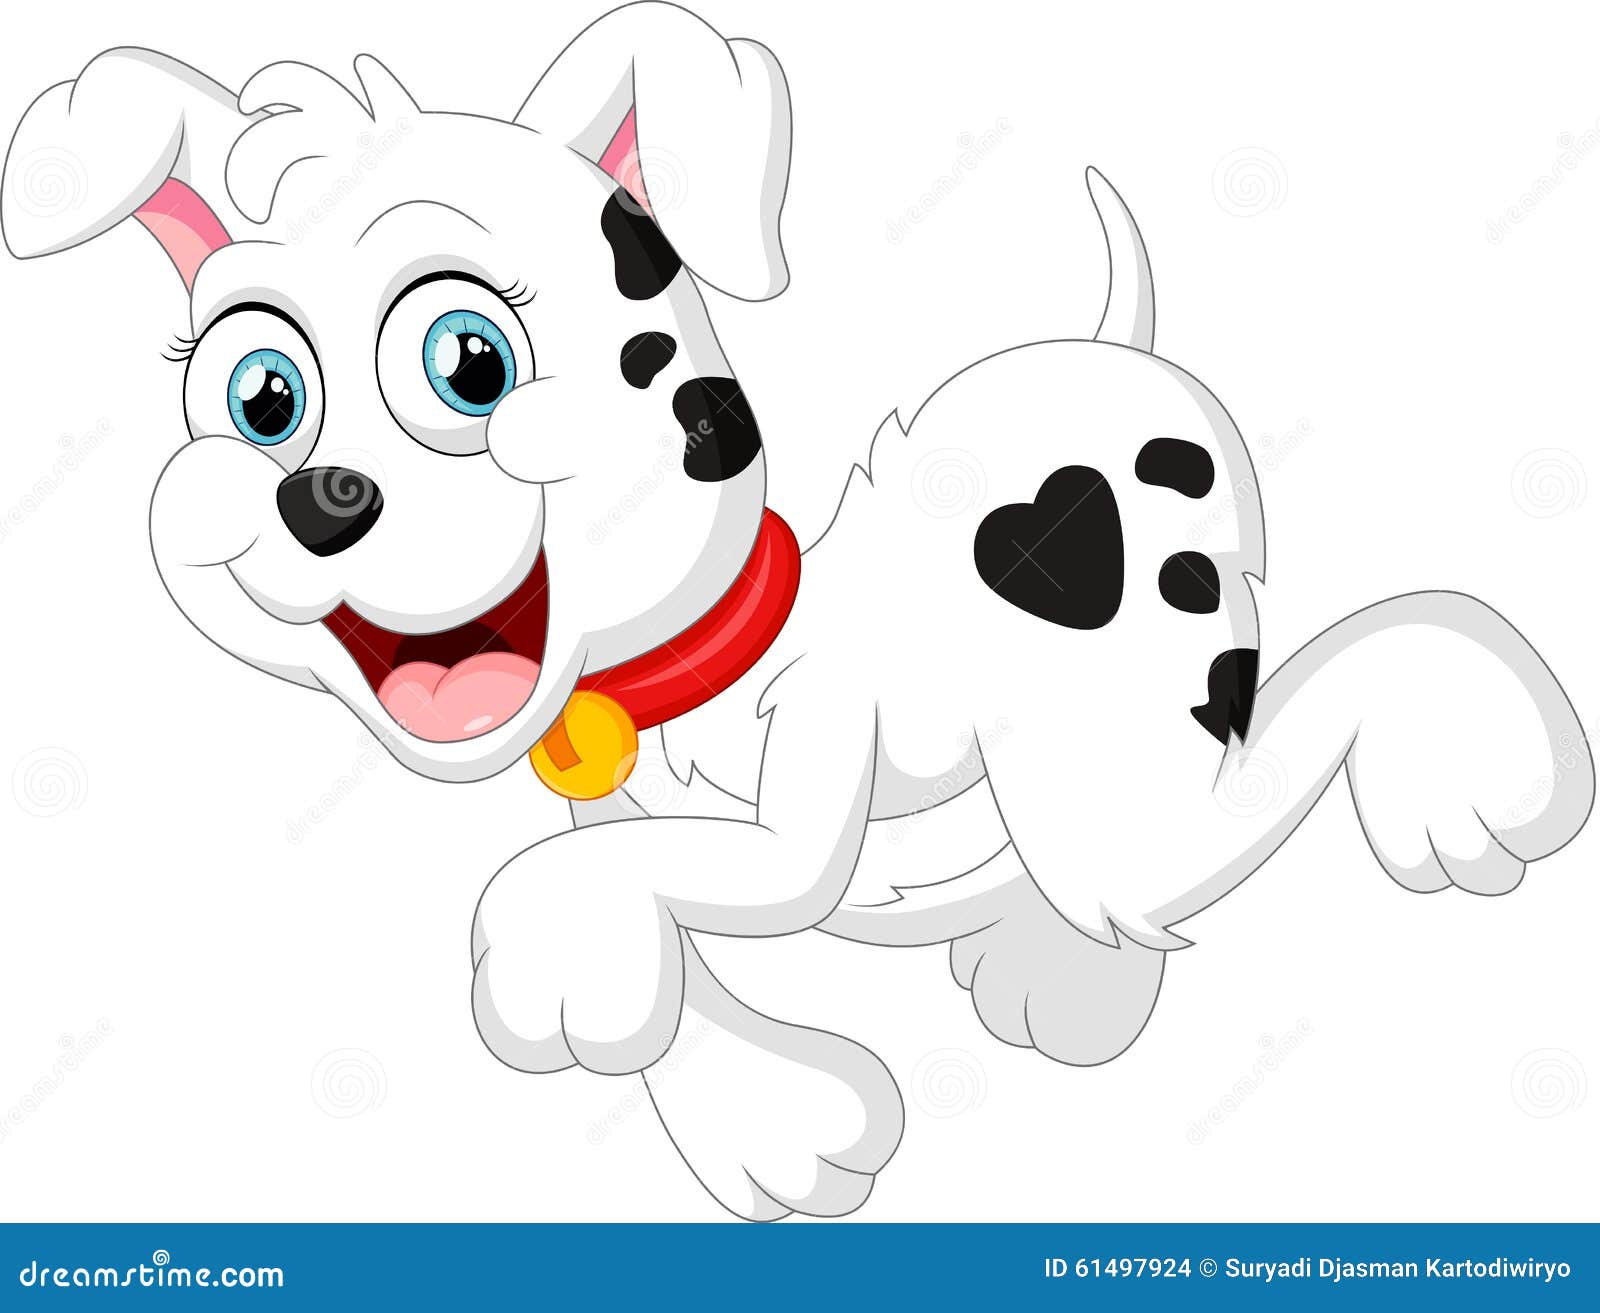 Cute dog cartoon stock illustration. Illustration of green - 61497924